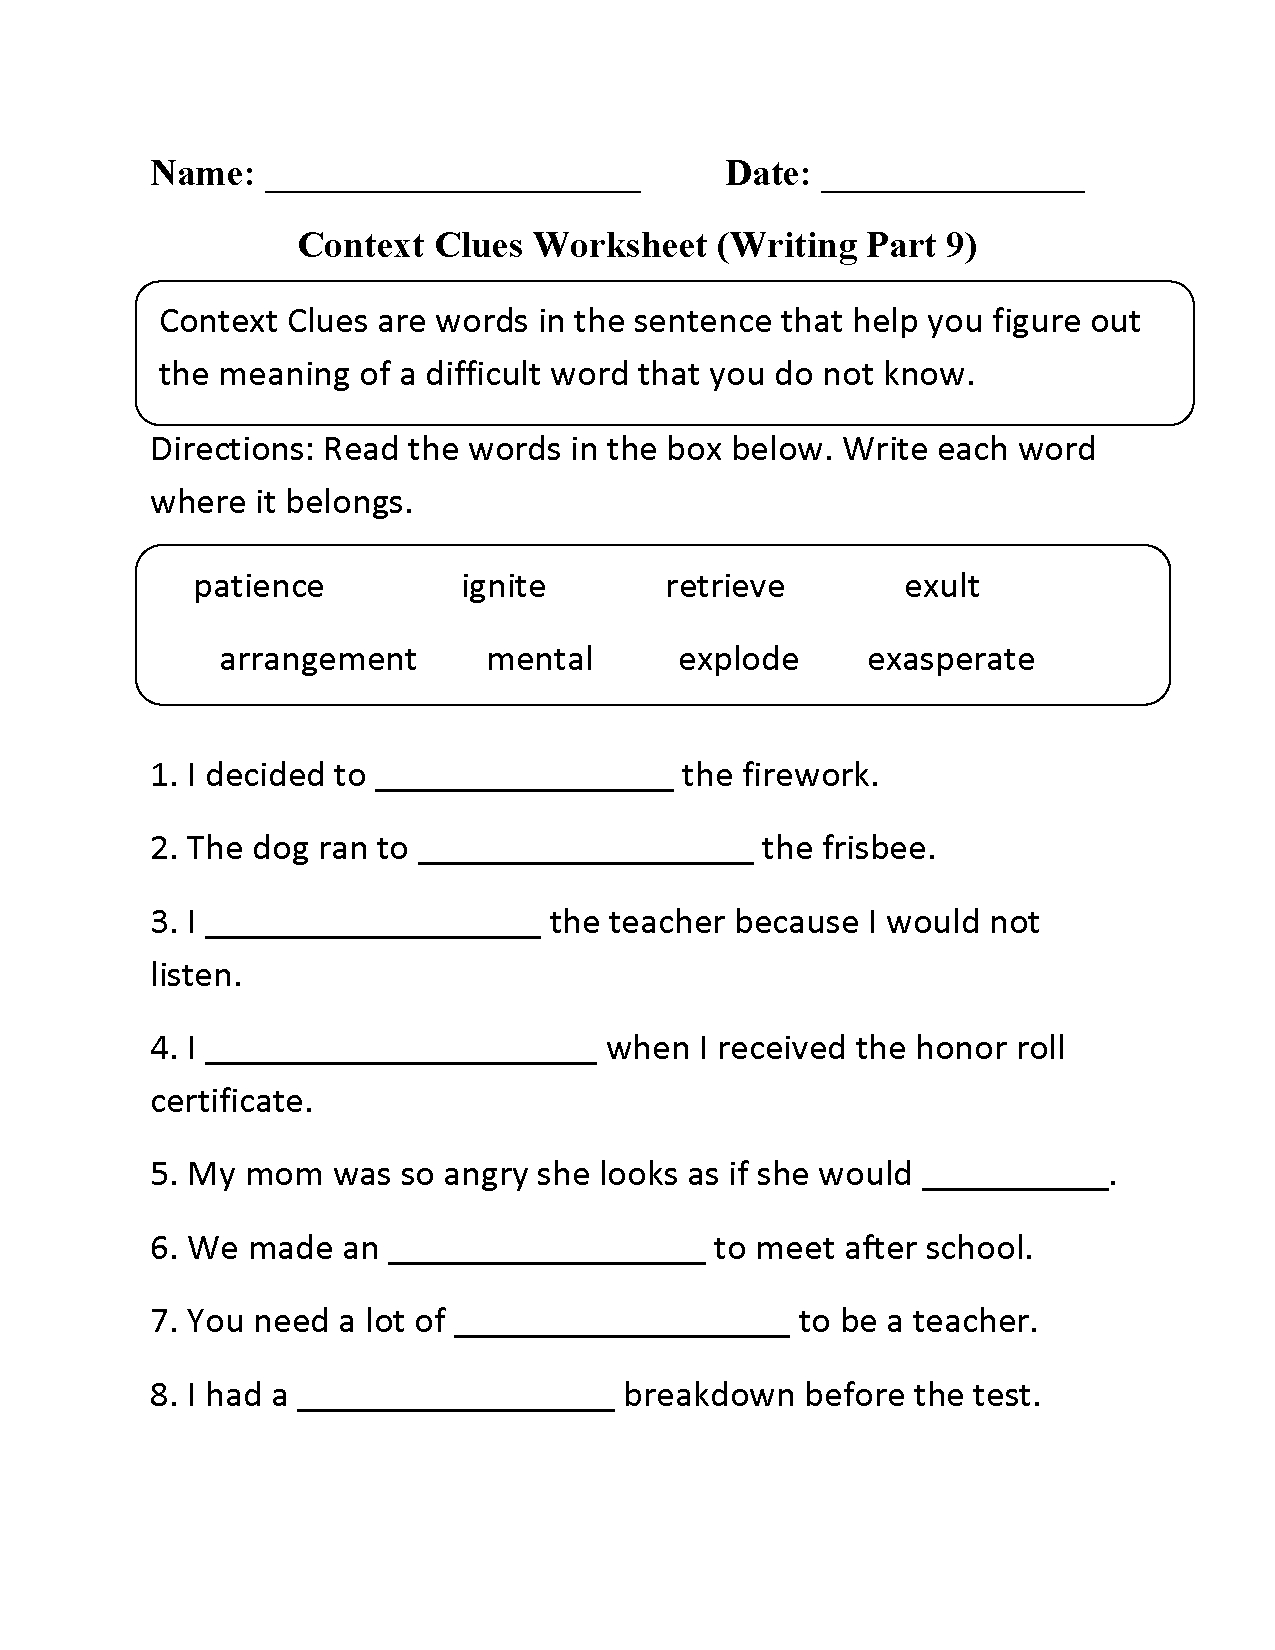 Context Clues Worksheet Writing Part 9 Intermediate | Context Clues | Free Printable Context Clues Worksheets